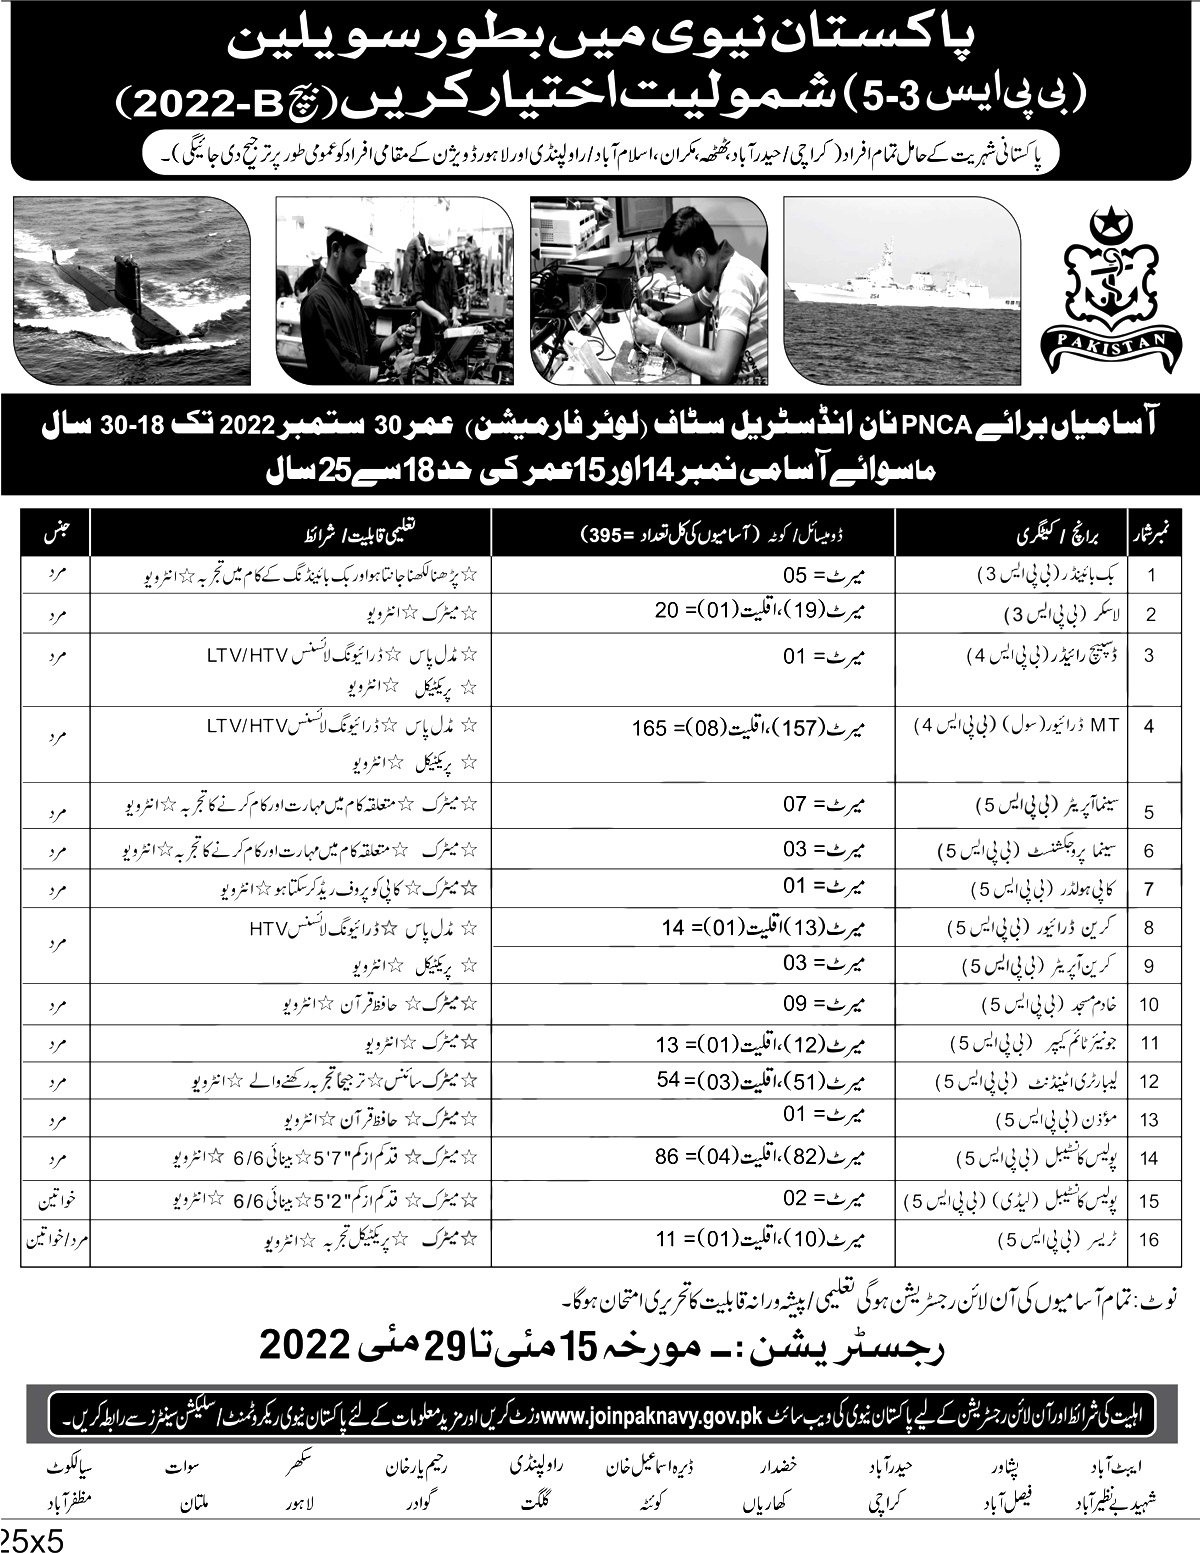 Join Pakistan Navy Civilian Jobs 2022 Batch B-2022